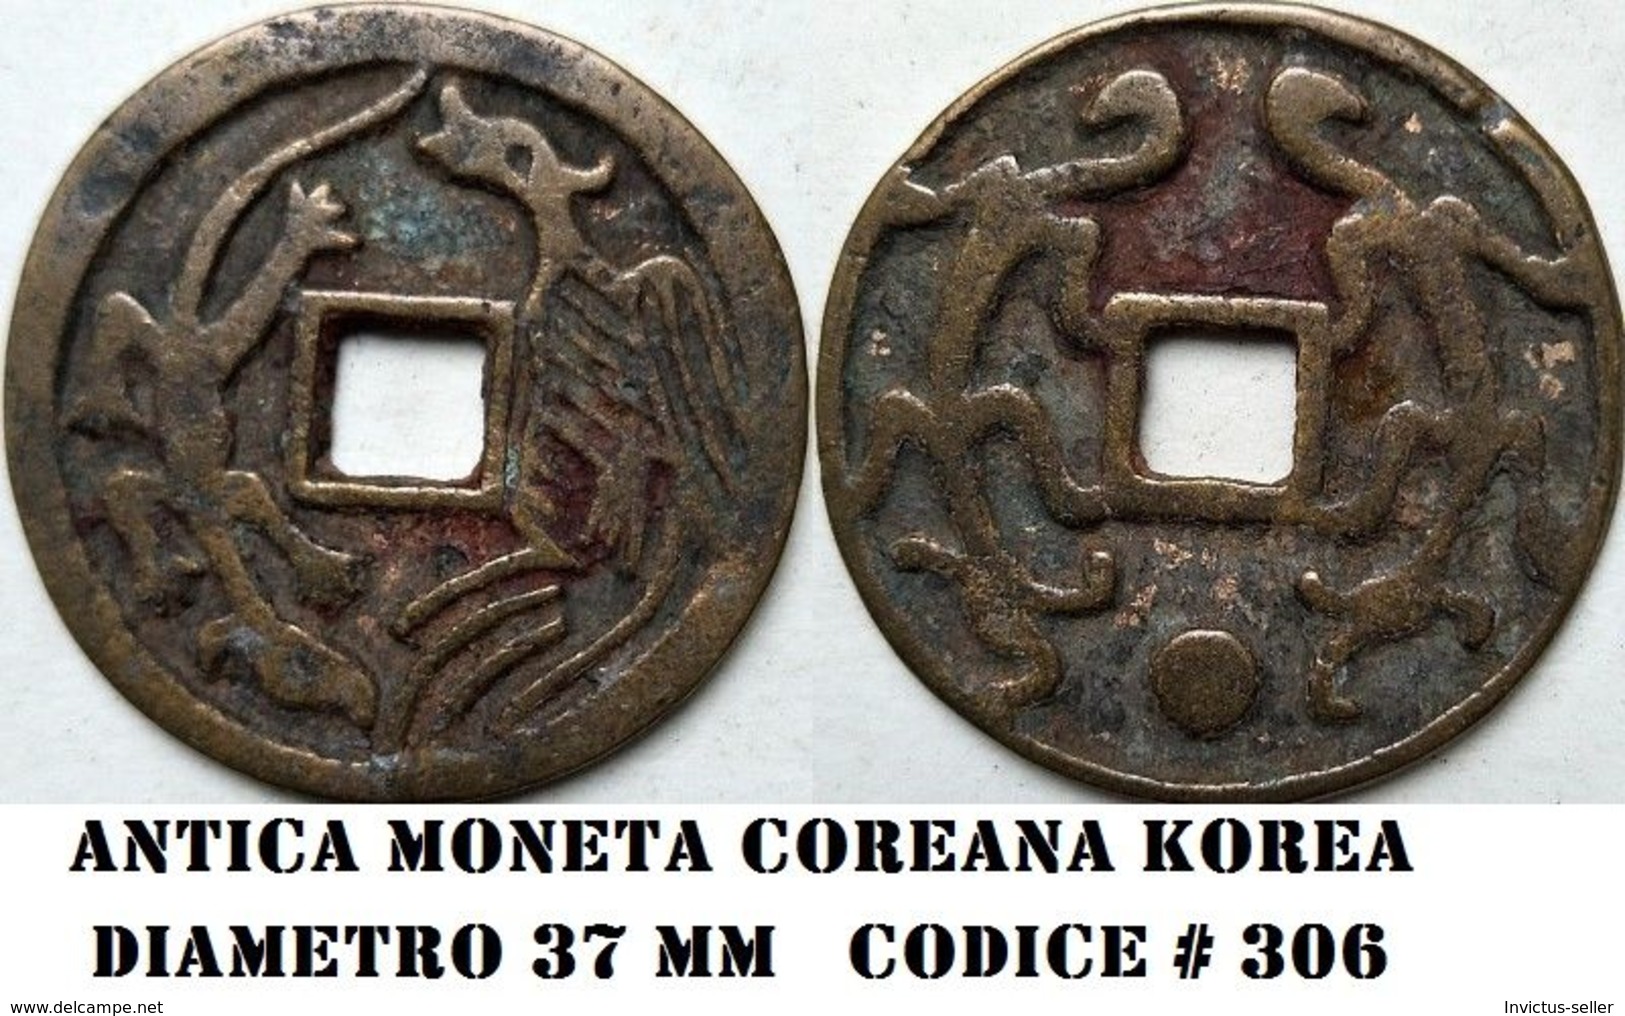 KOREA ANTICA MONETA COREANA PERIODO IMPERIALE IMPERIALE COREANE COINS  PIECES MONET COREA IMPERIAL COD #306 - Corea Del Norte